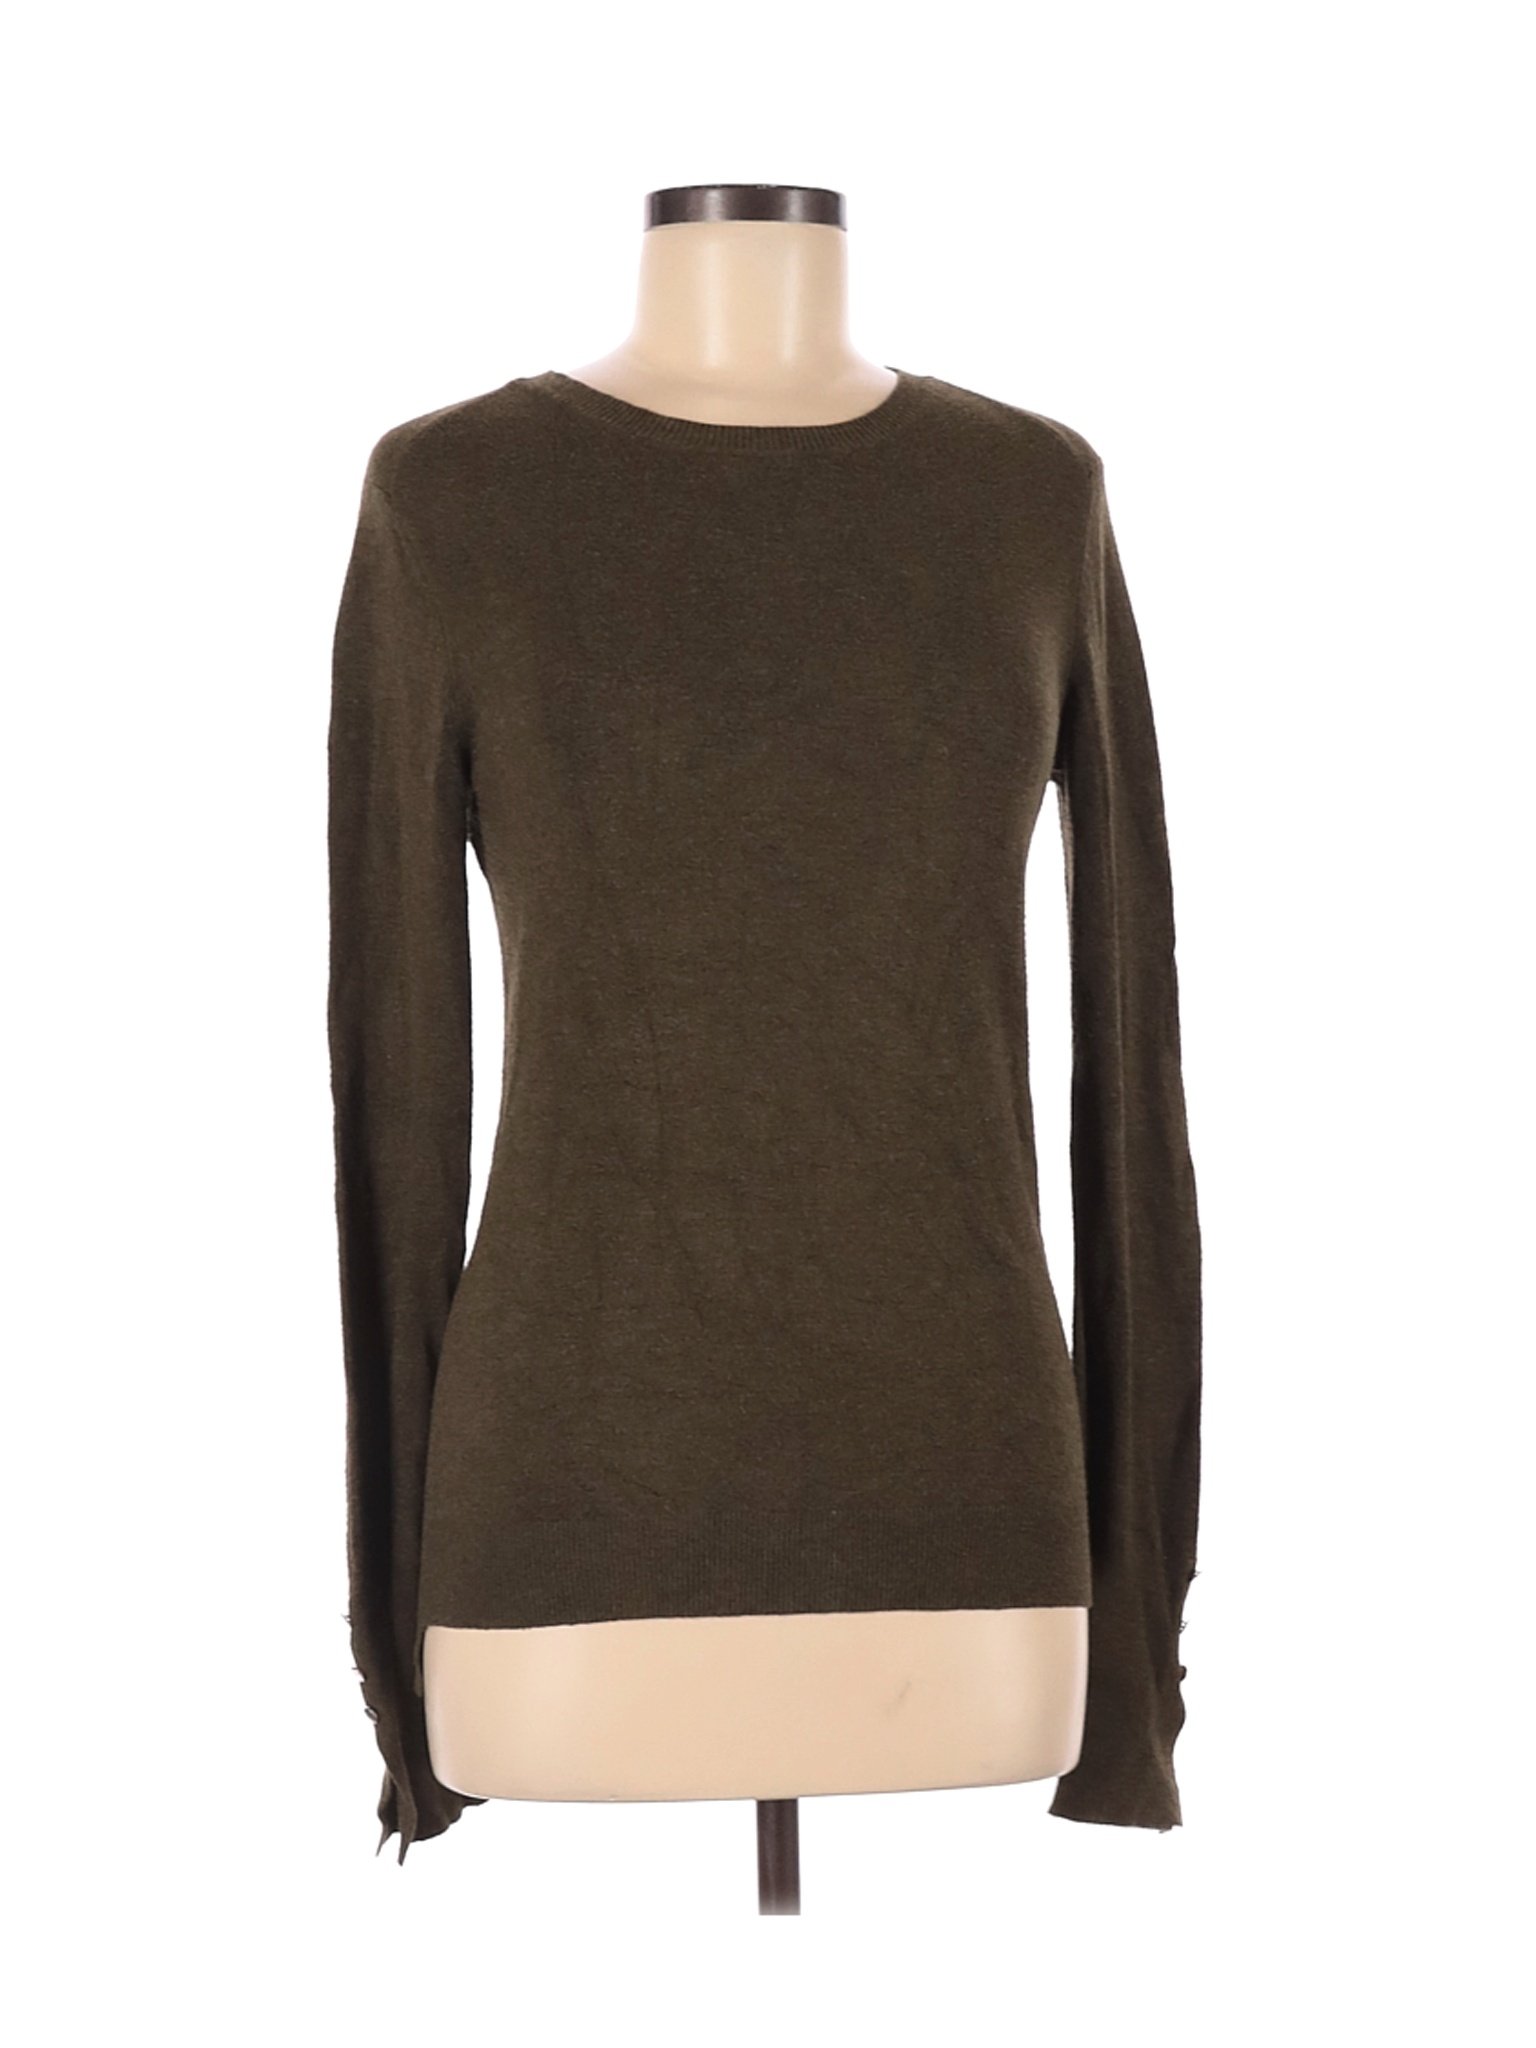 Zara Women Green Pullover Sweater M | eBay